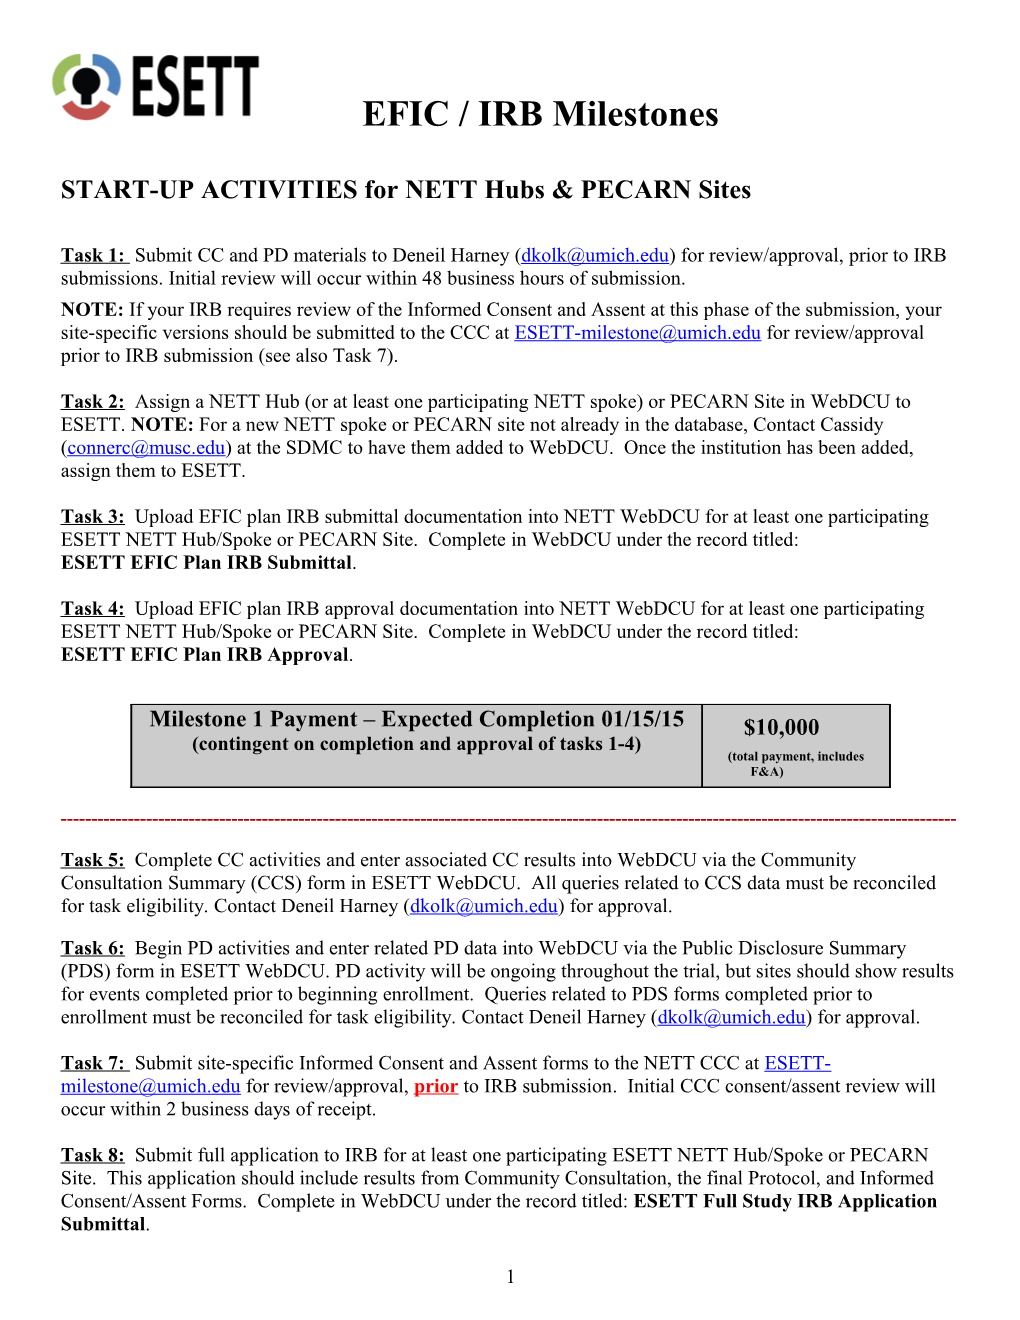 START-UP ACTIVITIES for NETT Hubs & PECARN Sites